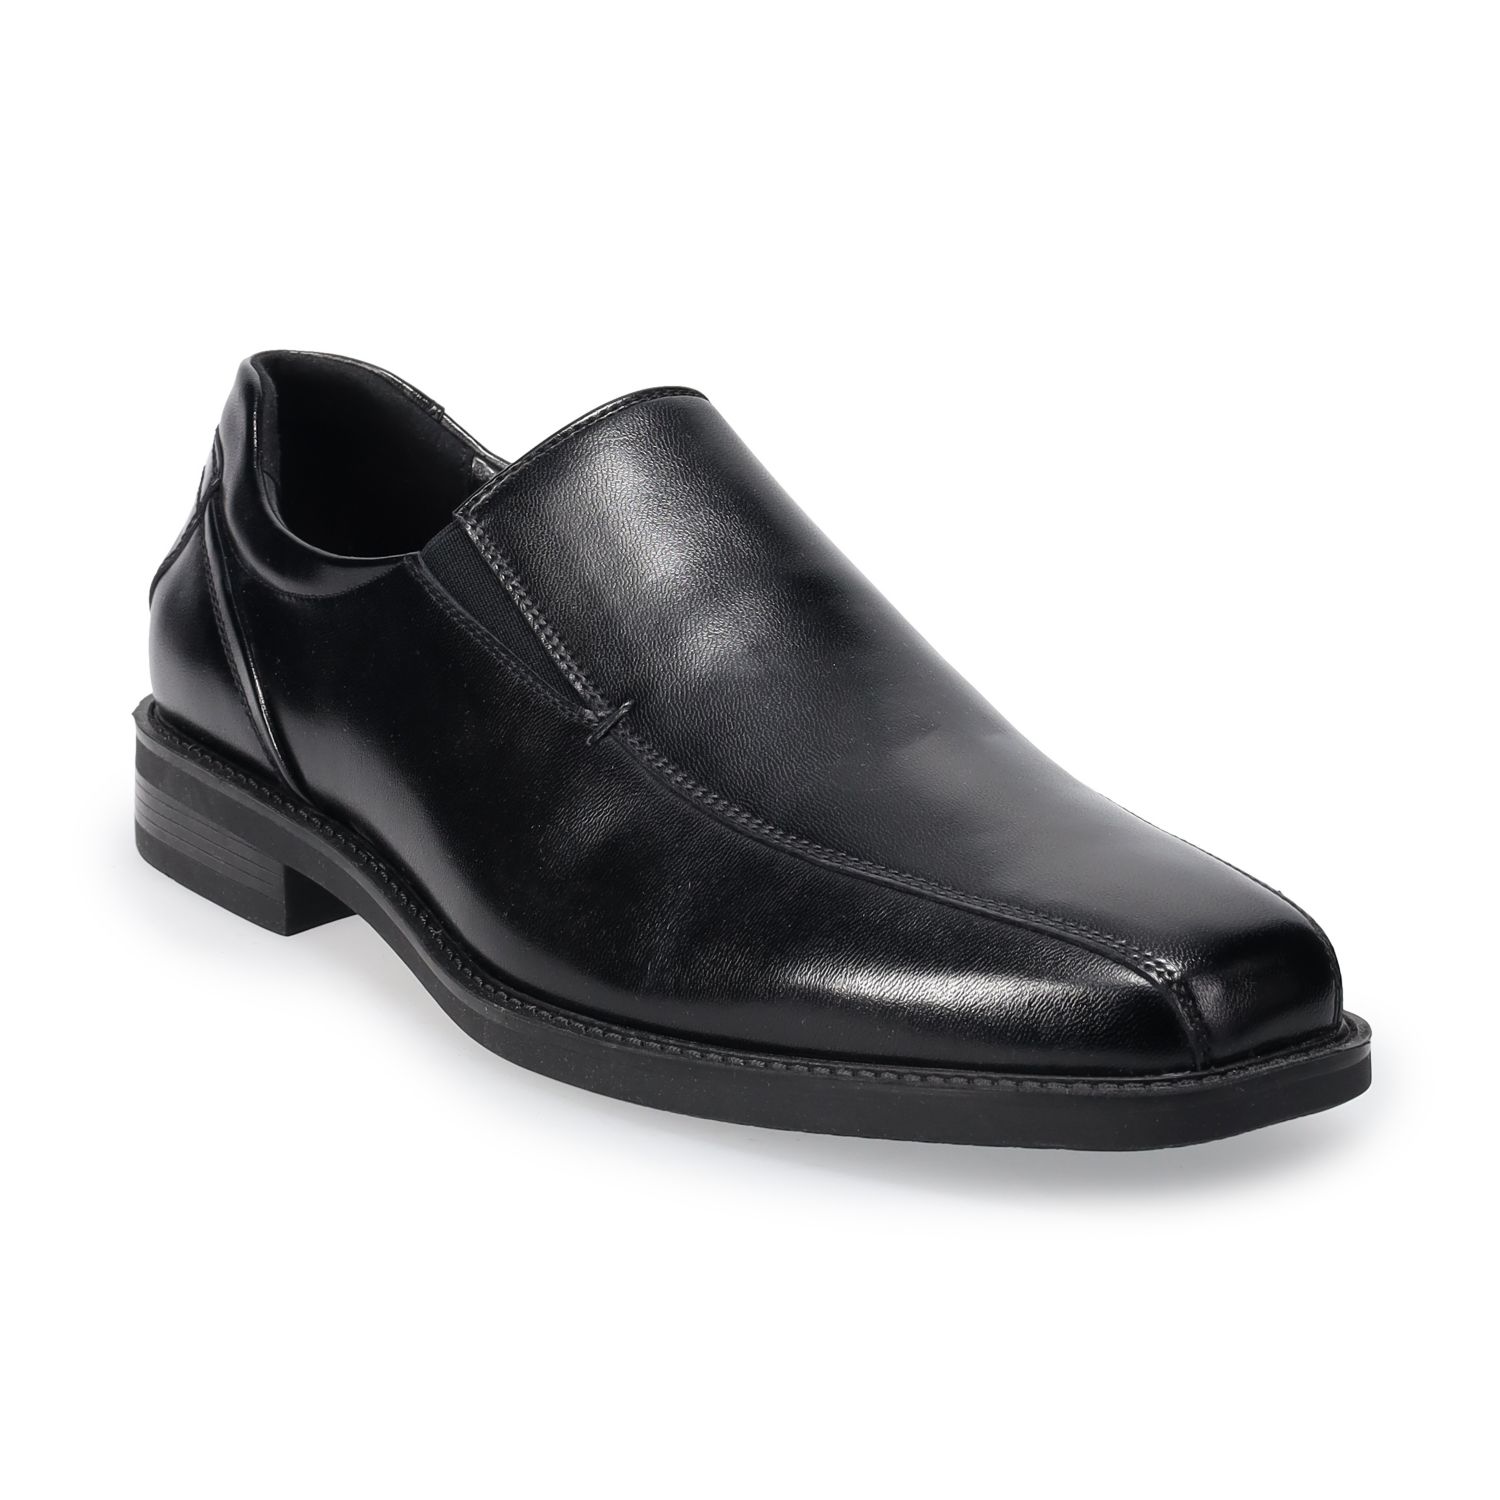 black slip on dress shoes